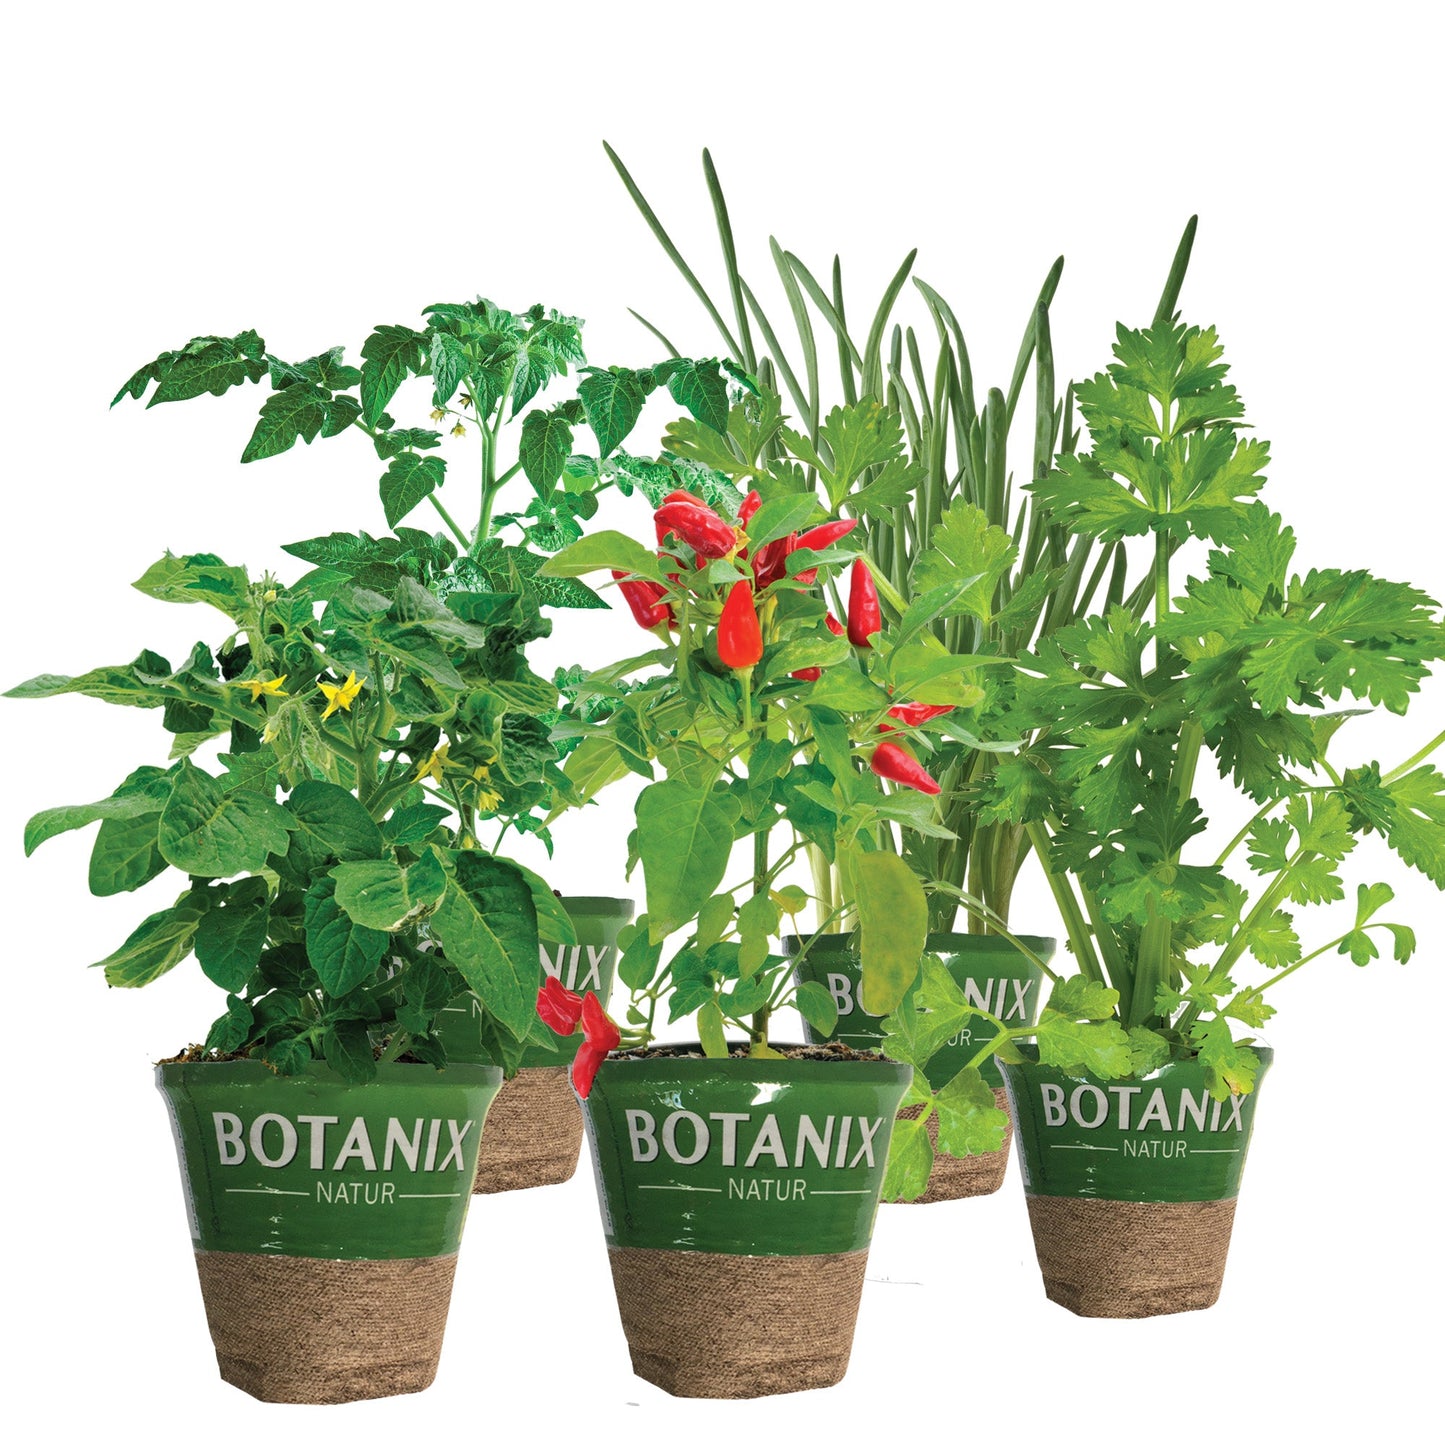 Plants de légumes Botanix Natur assortis